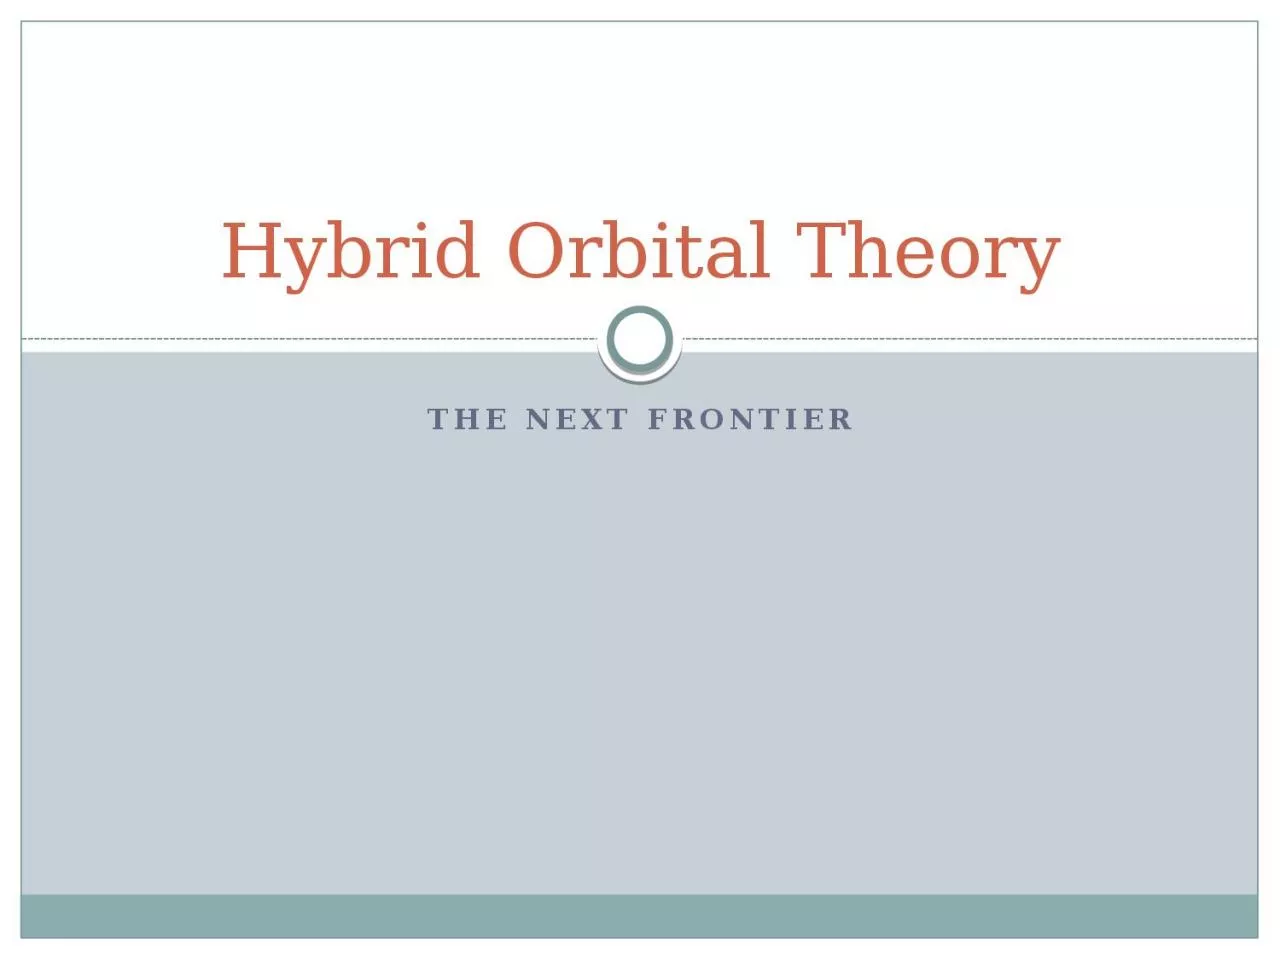 The next frontier Hybrid Orbital Theory